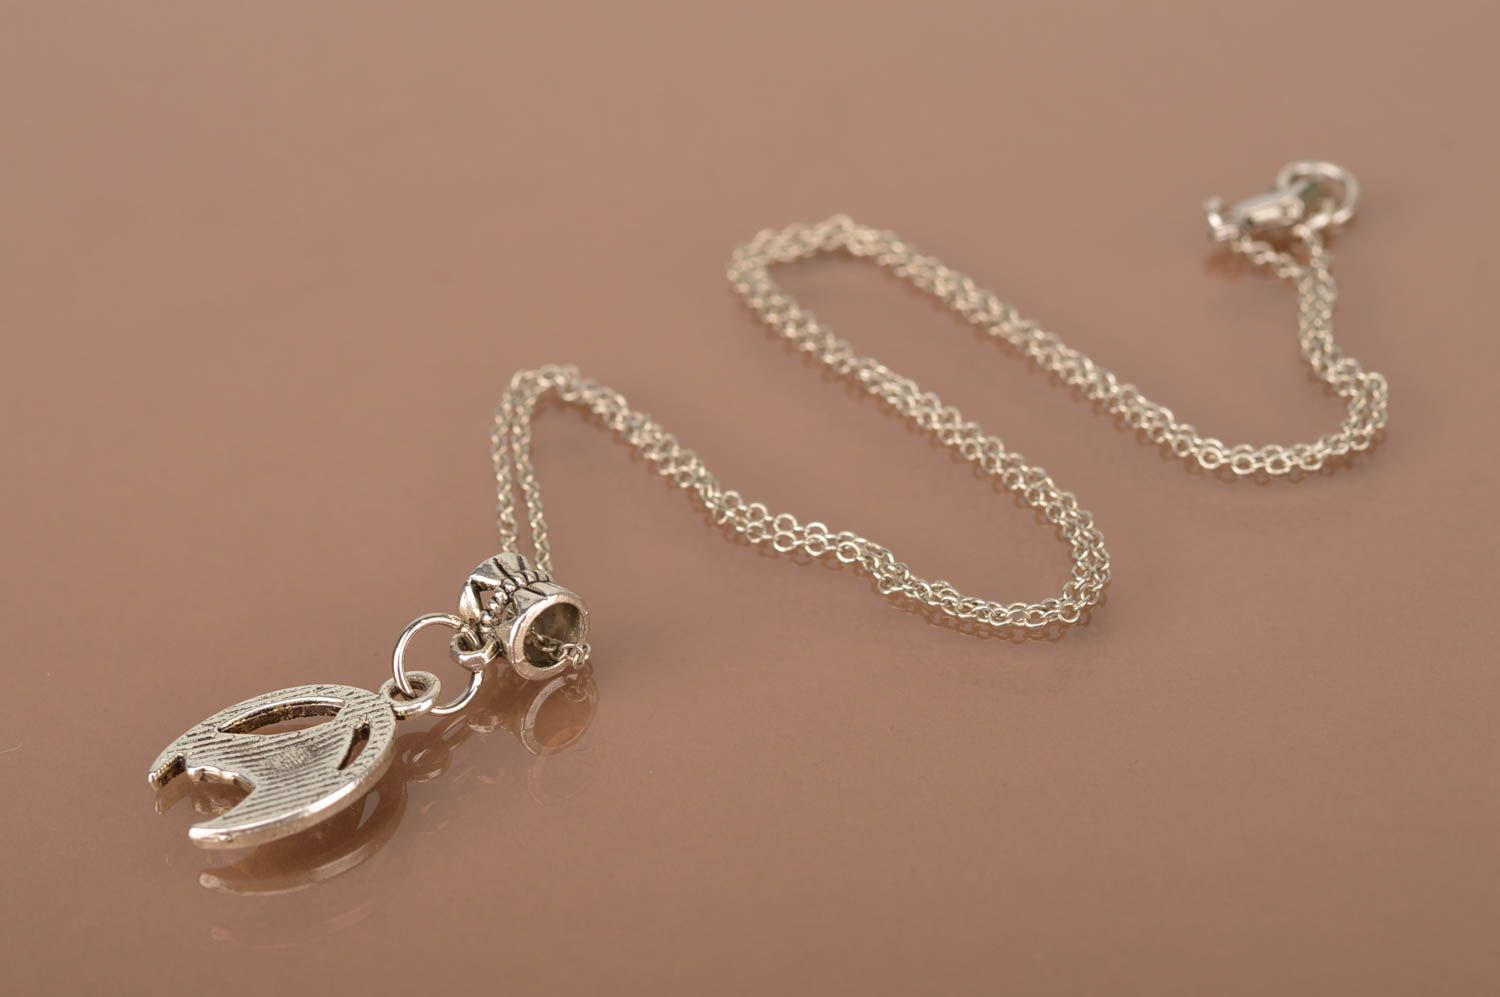 Stylish handmade metal neck pendant metal jewelry designs jewelry trends photo 5